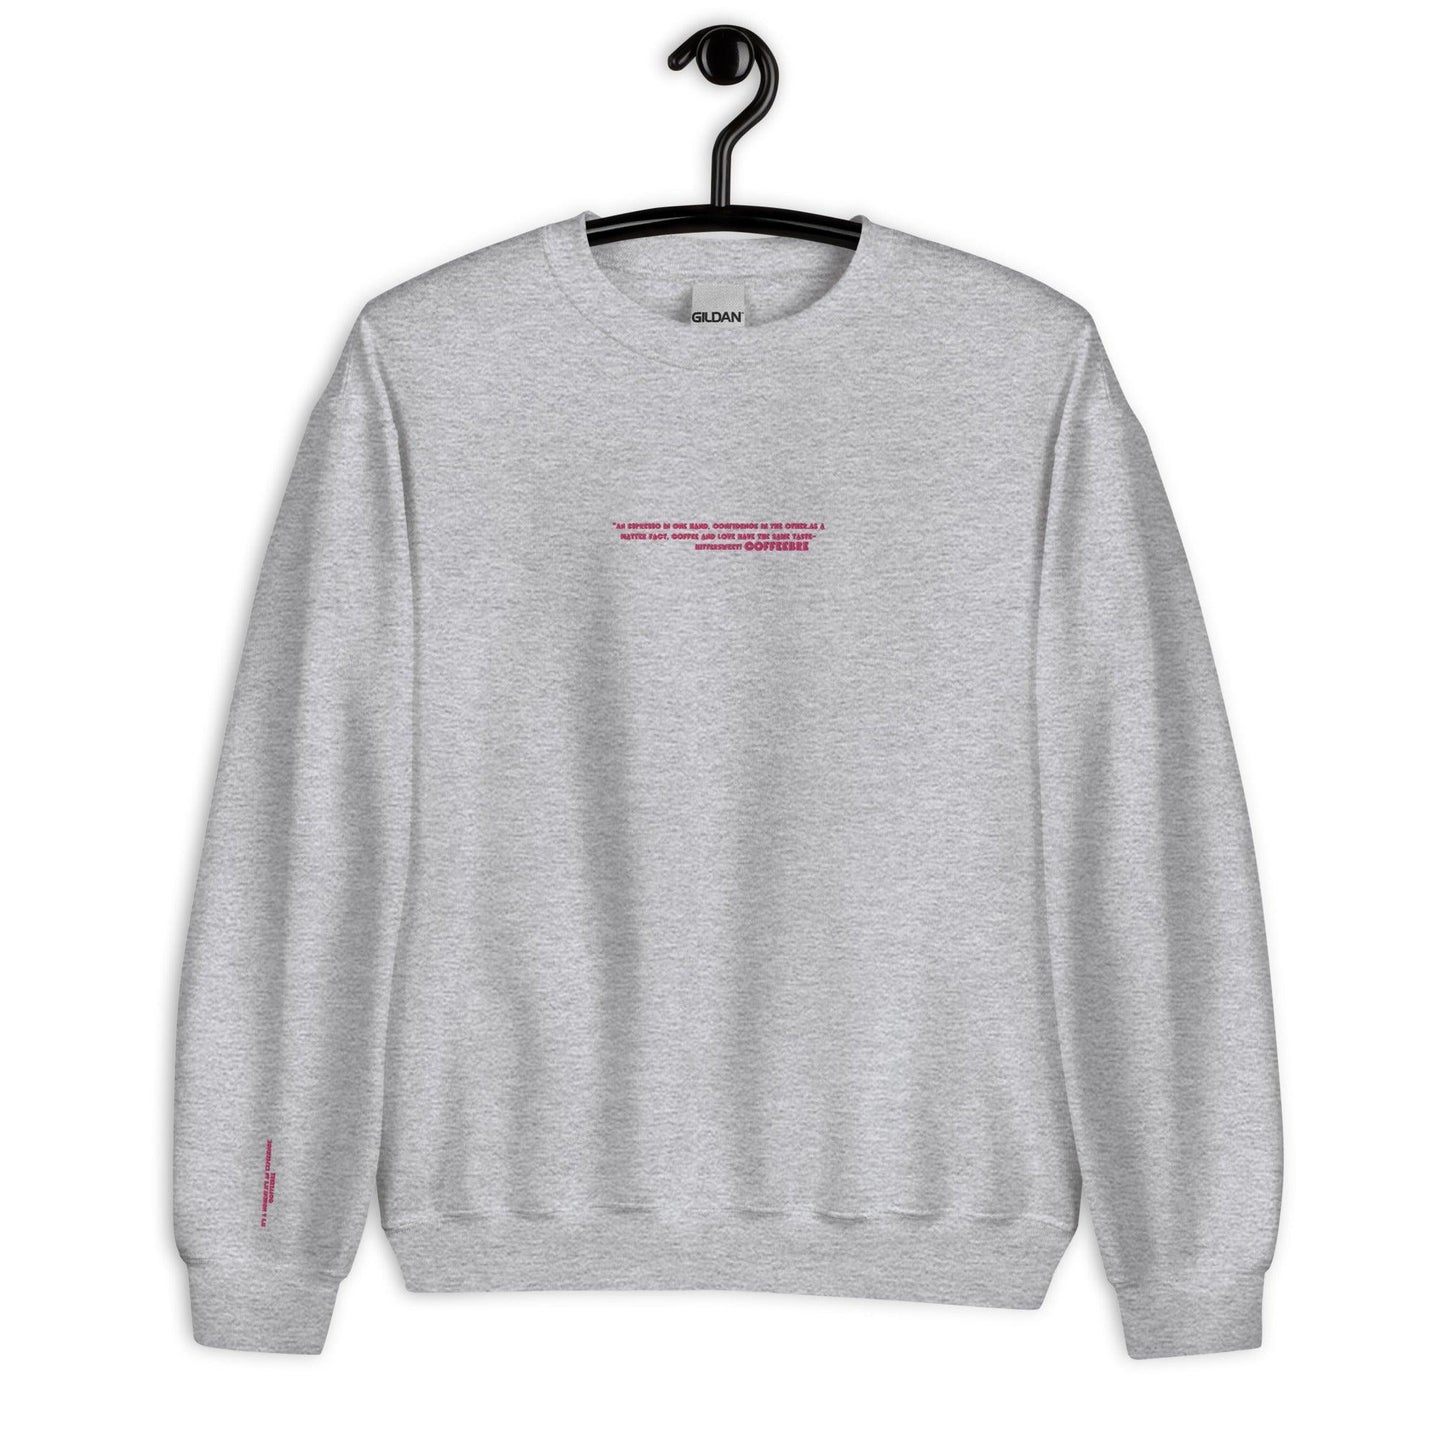 Embroidered Lifestyle Crewneck Coffee Unisex Sweatshirts - COFFEEBRE